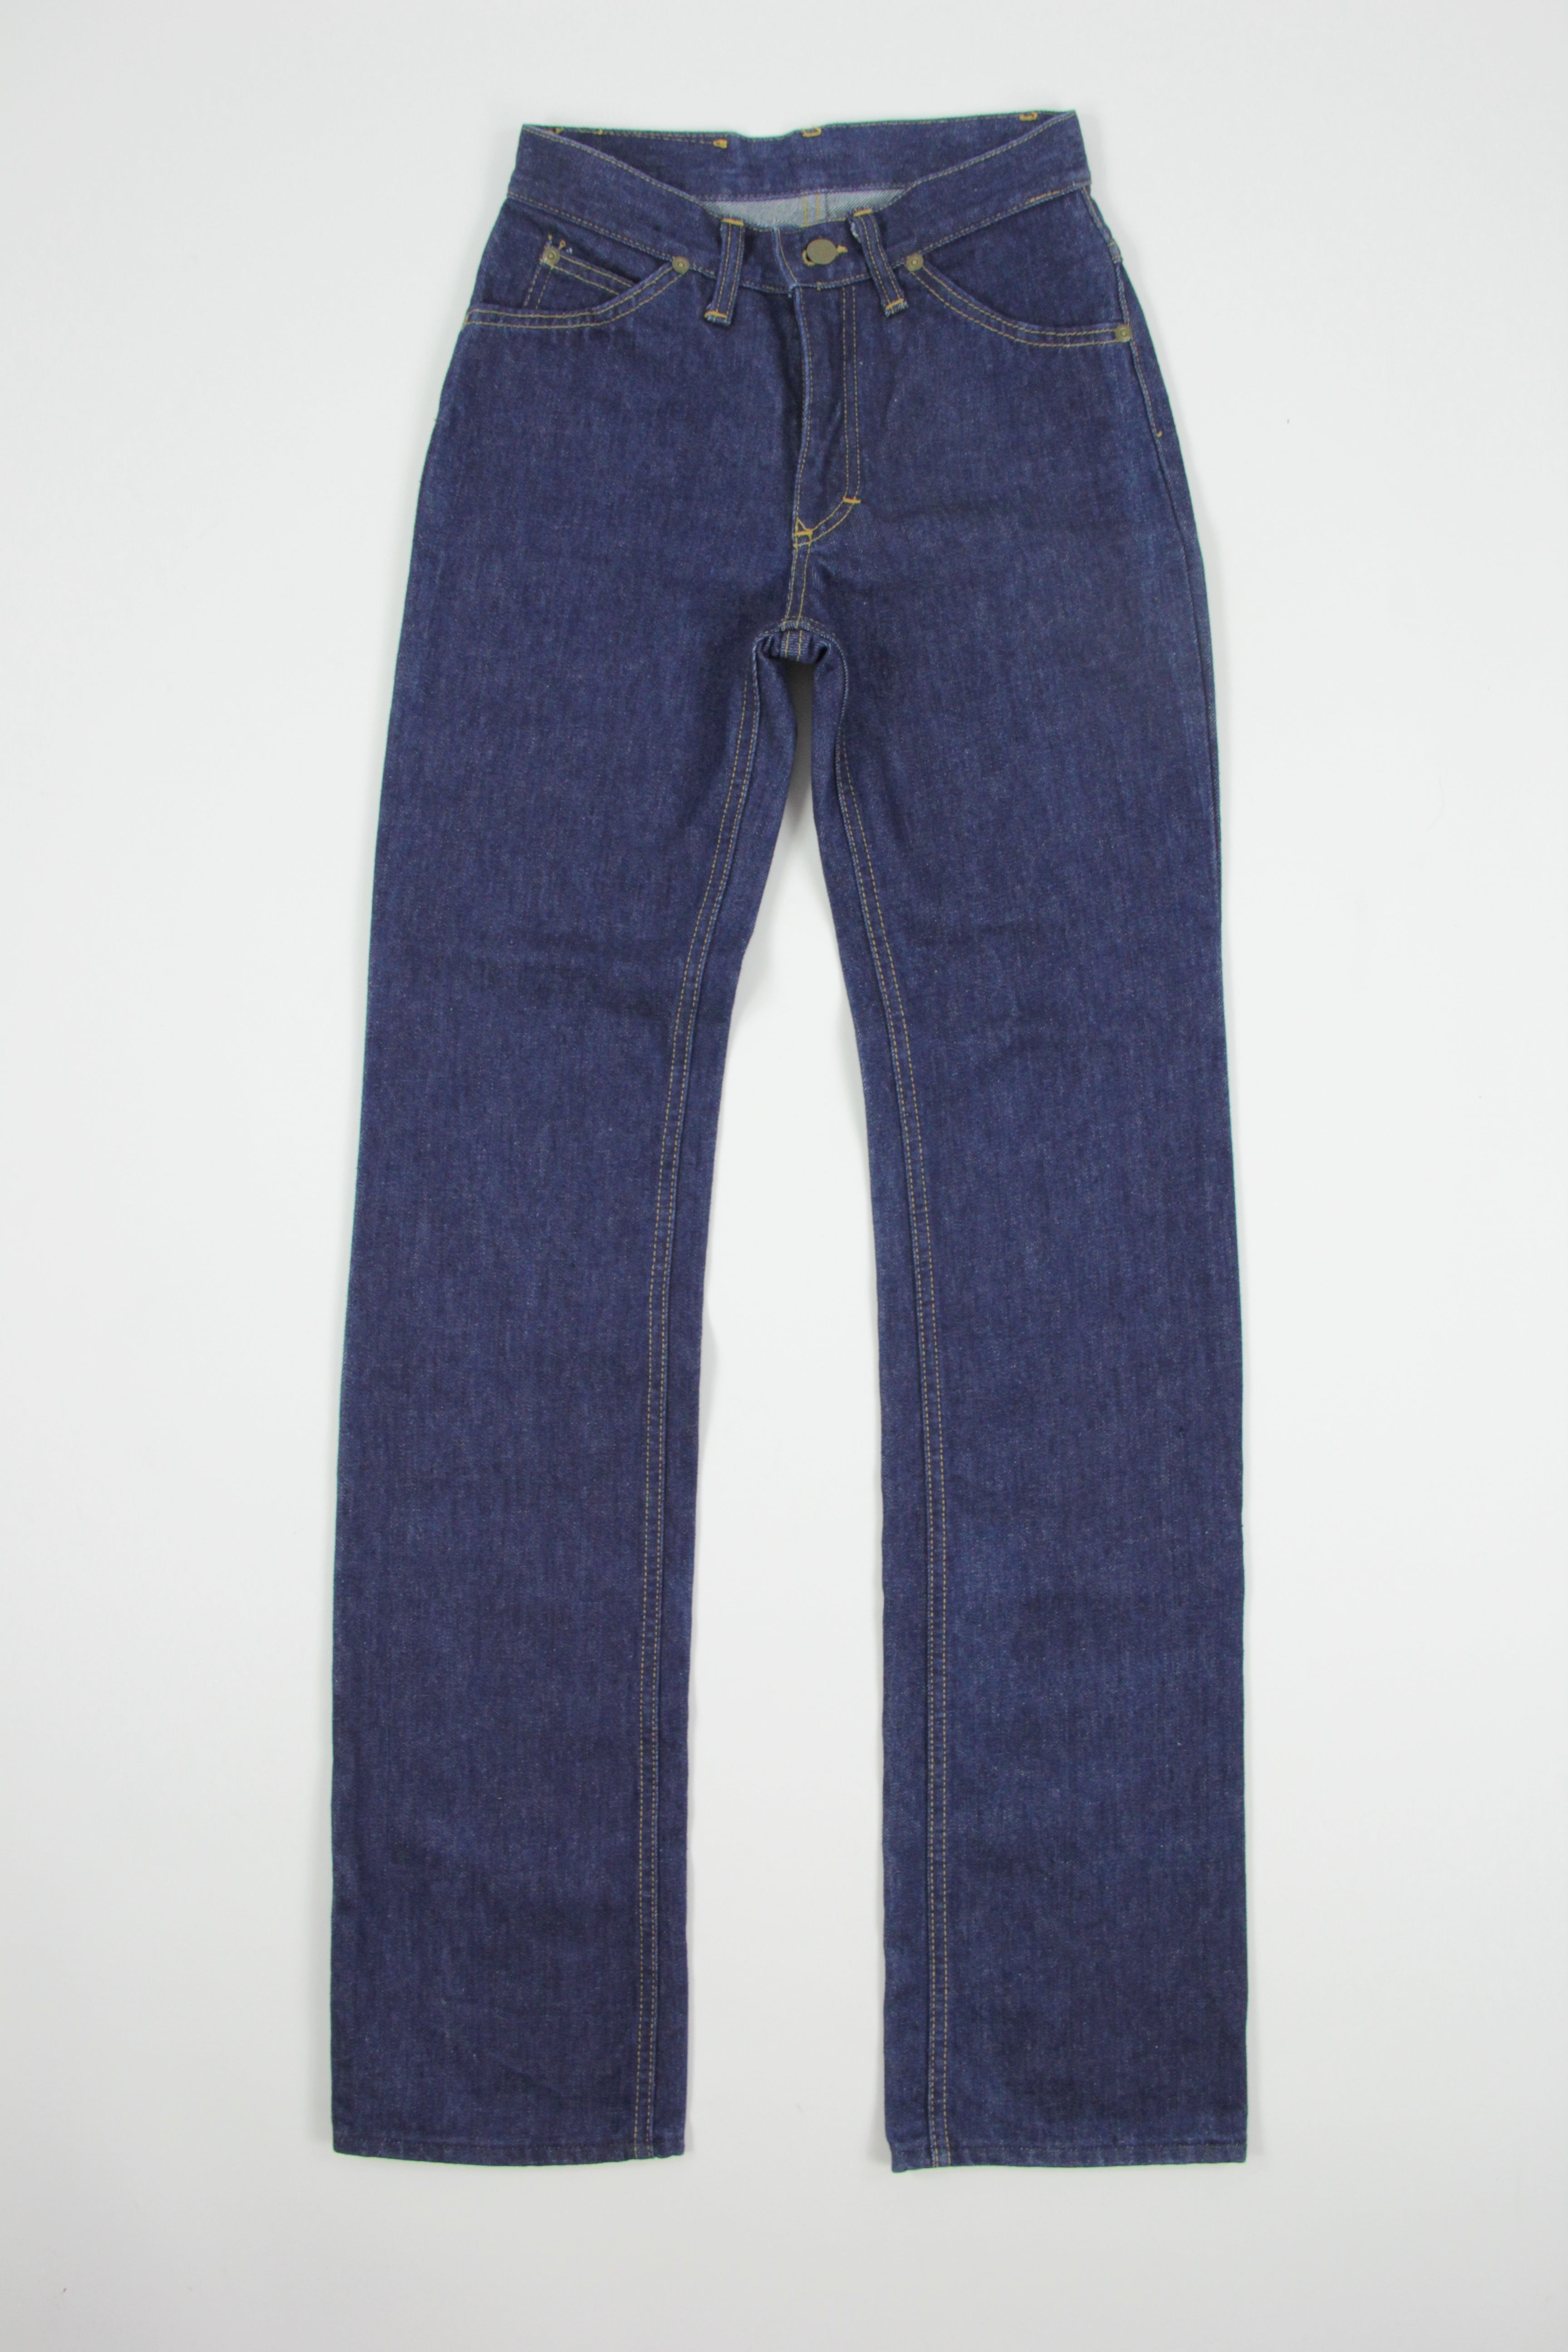 LEE Woman's Vintage Straight Long Leg Jeans SIZE W26/L35